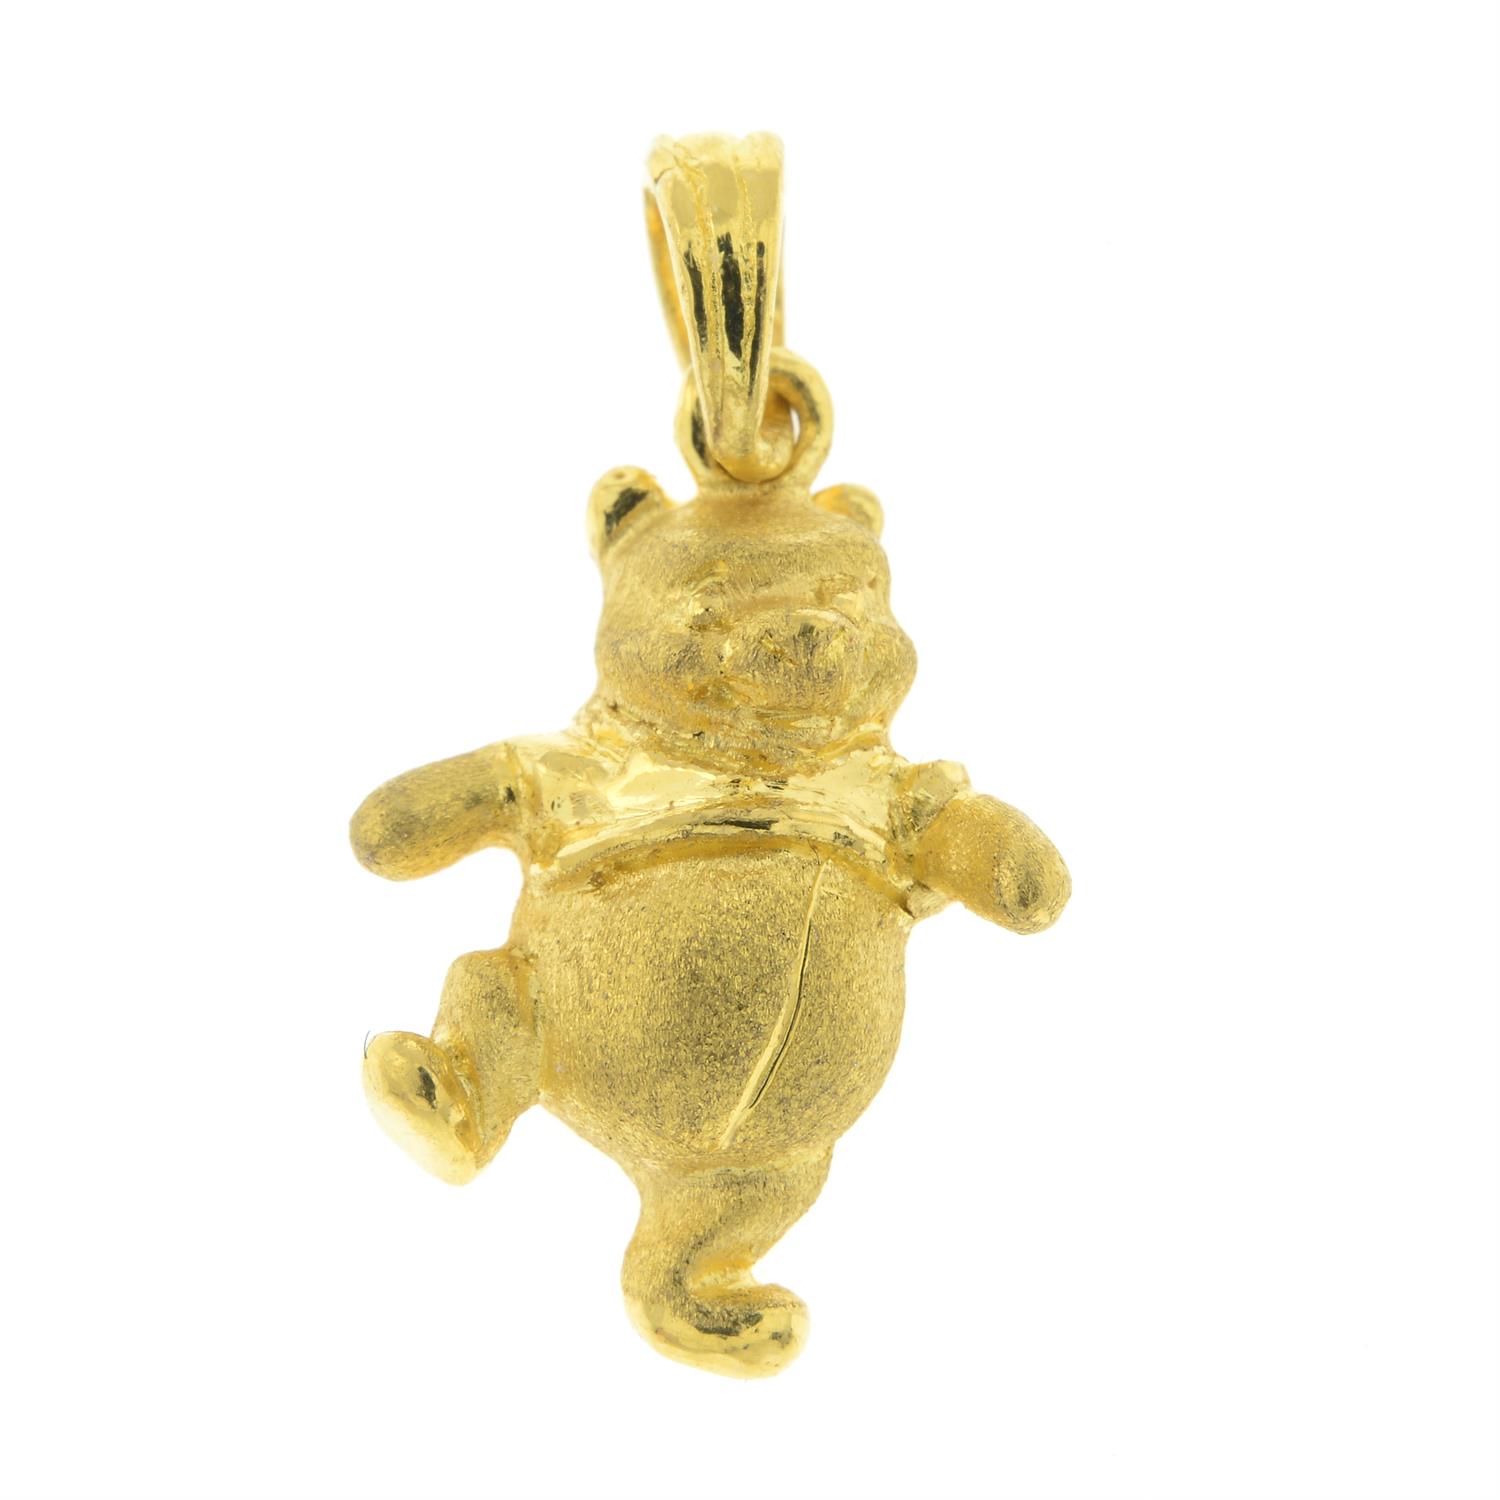 A Winnie the Pooh pendant, by Disney.